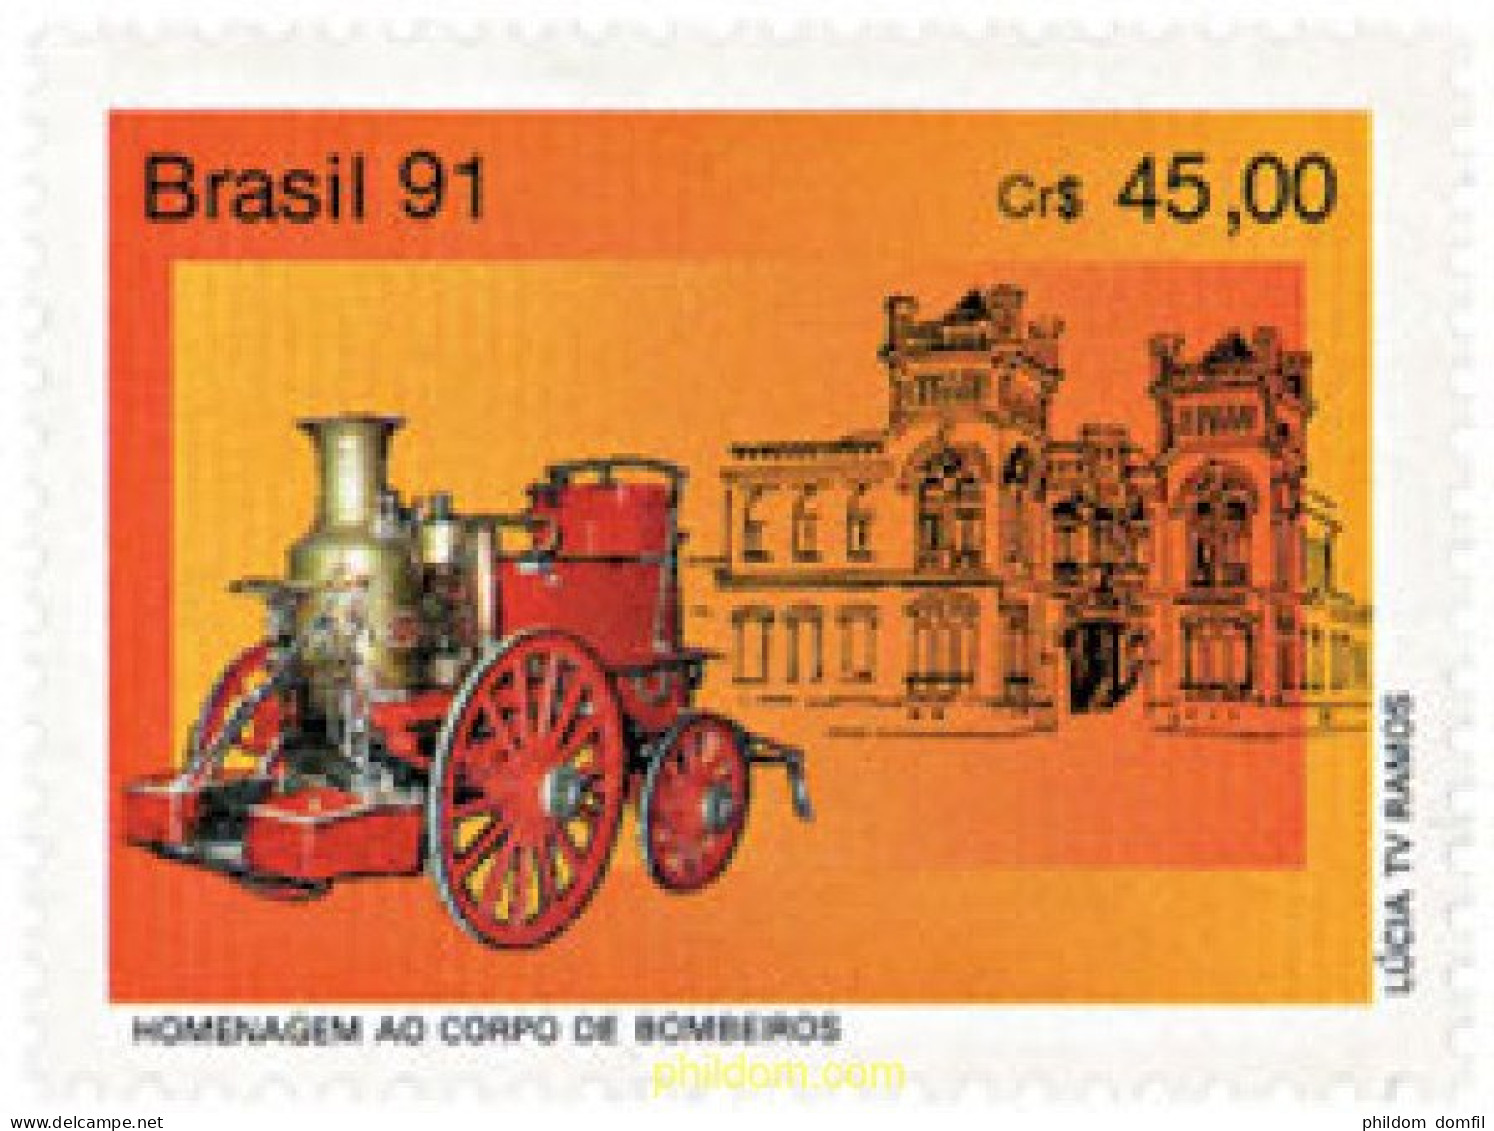 169938 MNH BRASIL 1991 HOMENAJE AL CUERPO DE BOMBEROS DE SAO PAULO - Ongebruikt